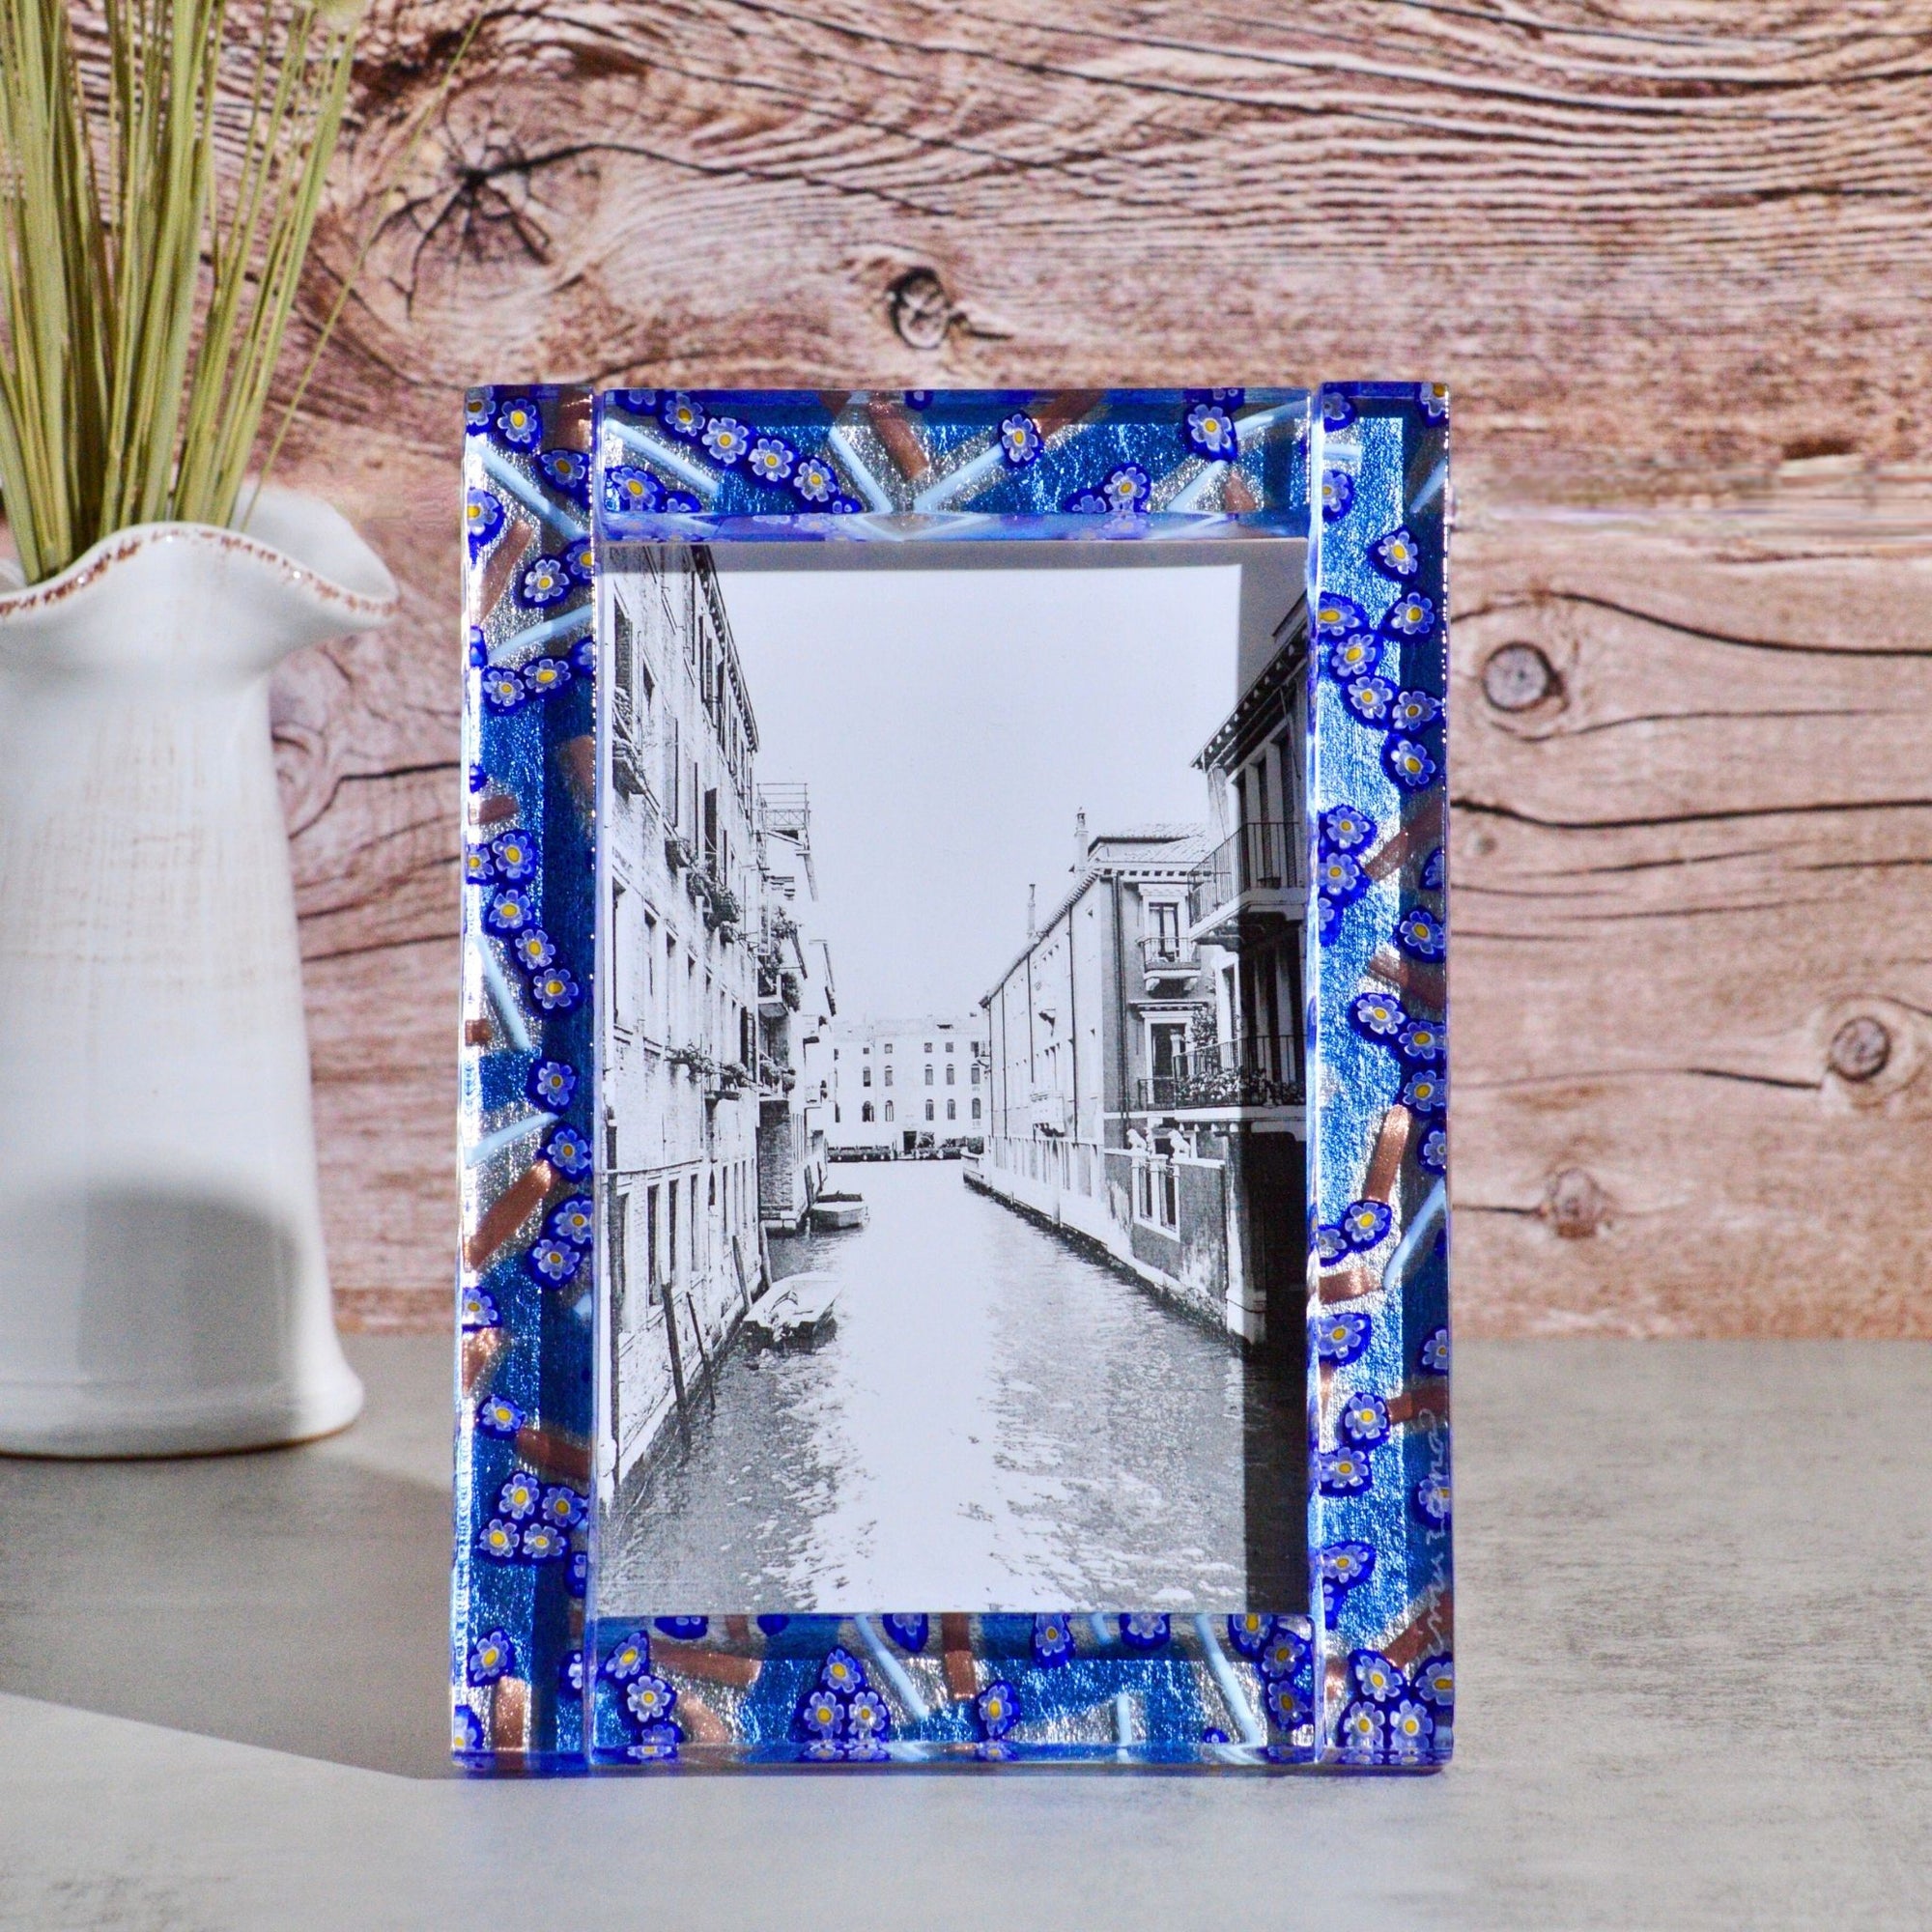 Blue Murano Glass Millefiori 5" x 7" Photo Frame, Made in Italy - My Italian Decor